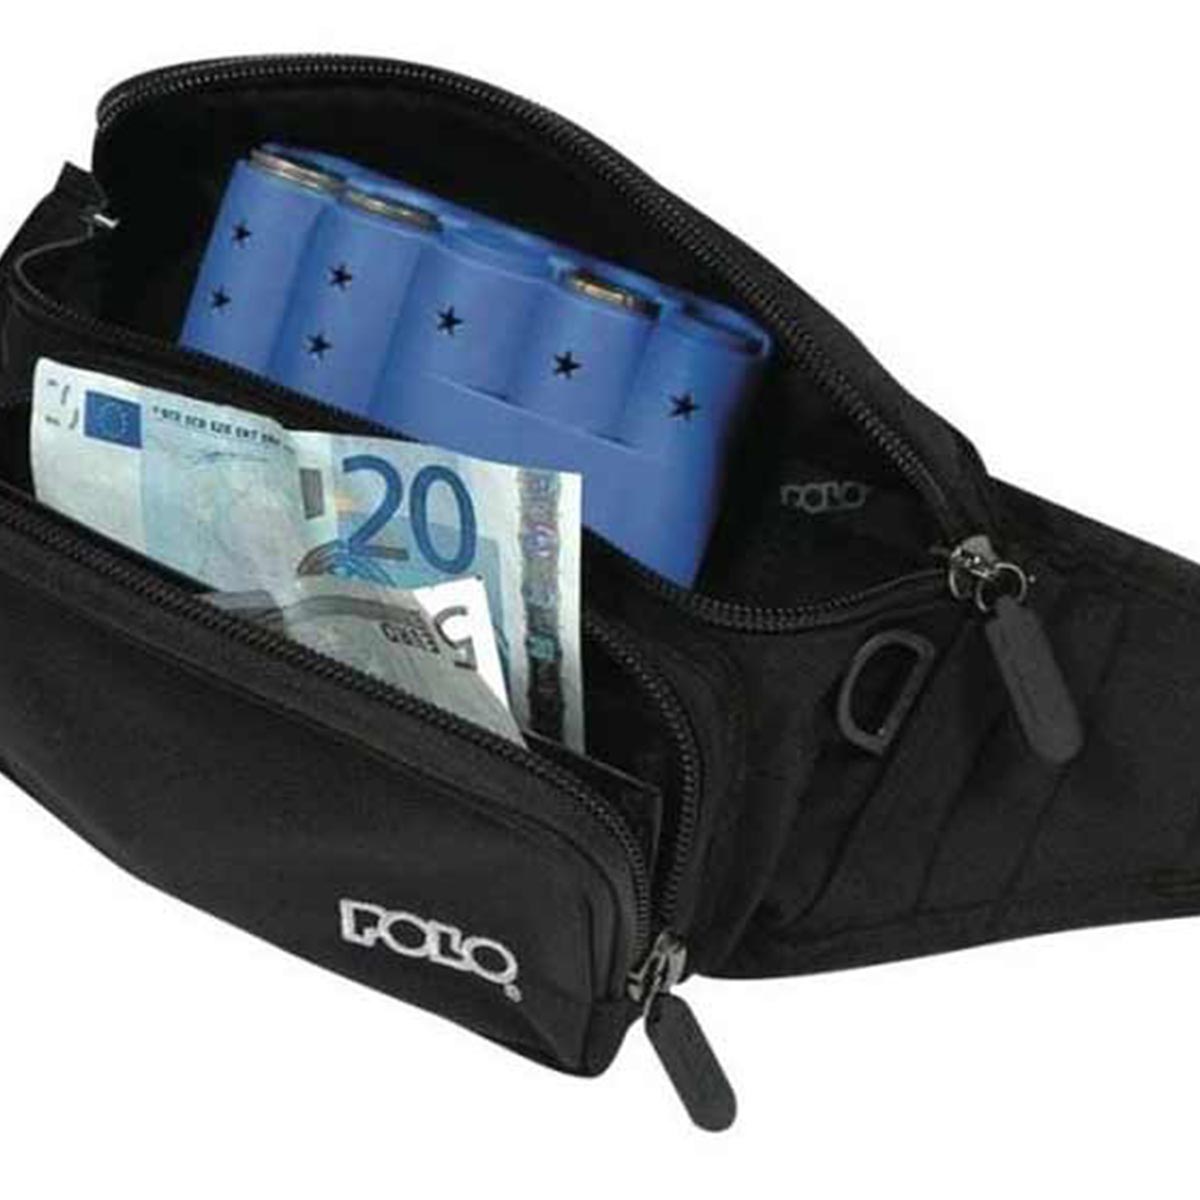 POLO - EURO WAIST BAG